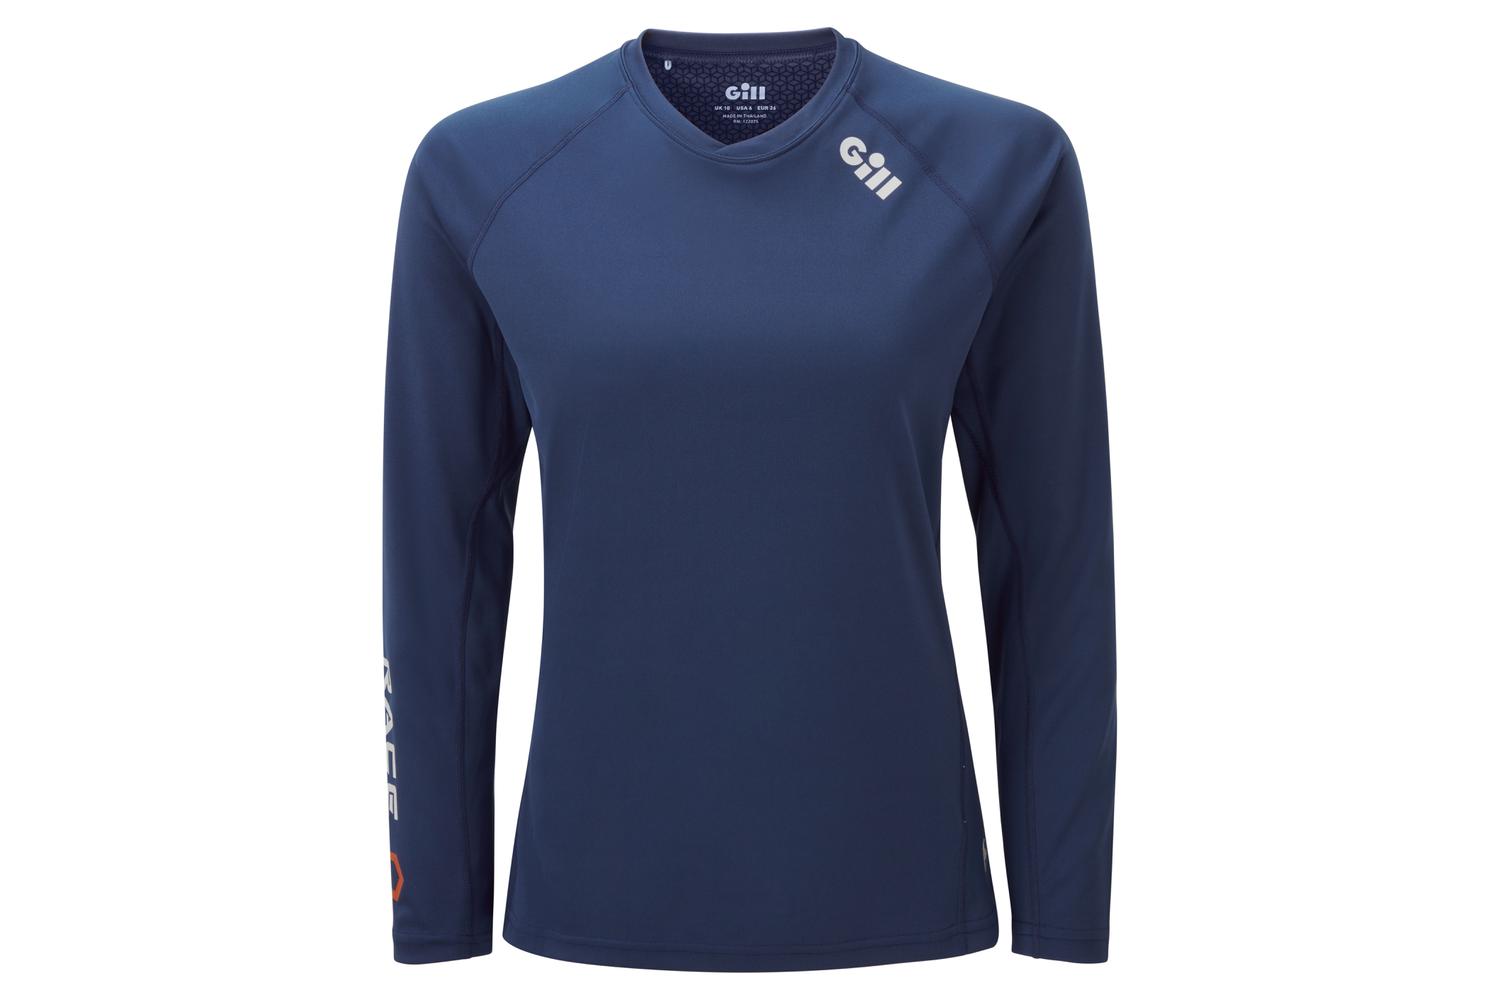 Gill Race dames t-shirt met lange mouw Donker blauw XL